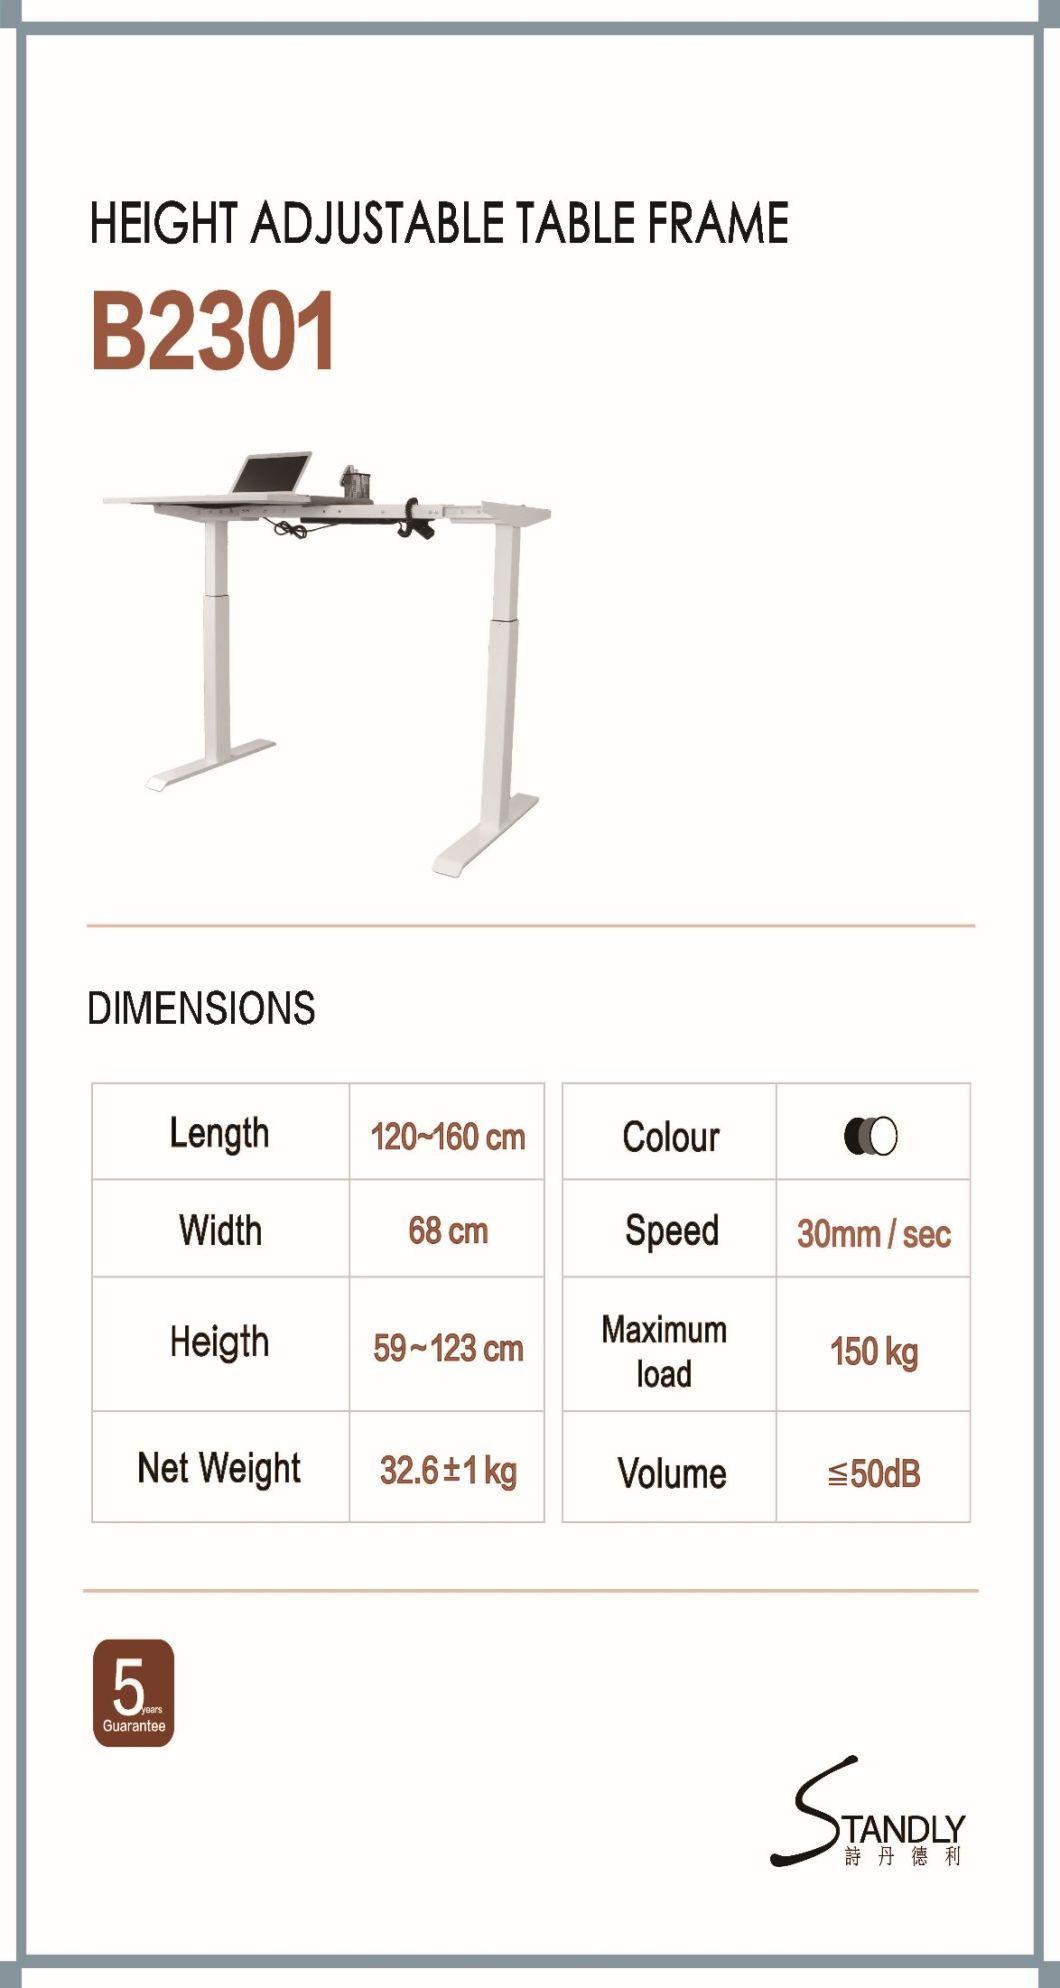 Smart Electric Lift Table Standing Computer Desk Home Desk Office Desk Mobile Desk Bedroom Learning Desk Height Adjustable Table with Single Motor Two Stage